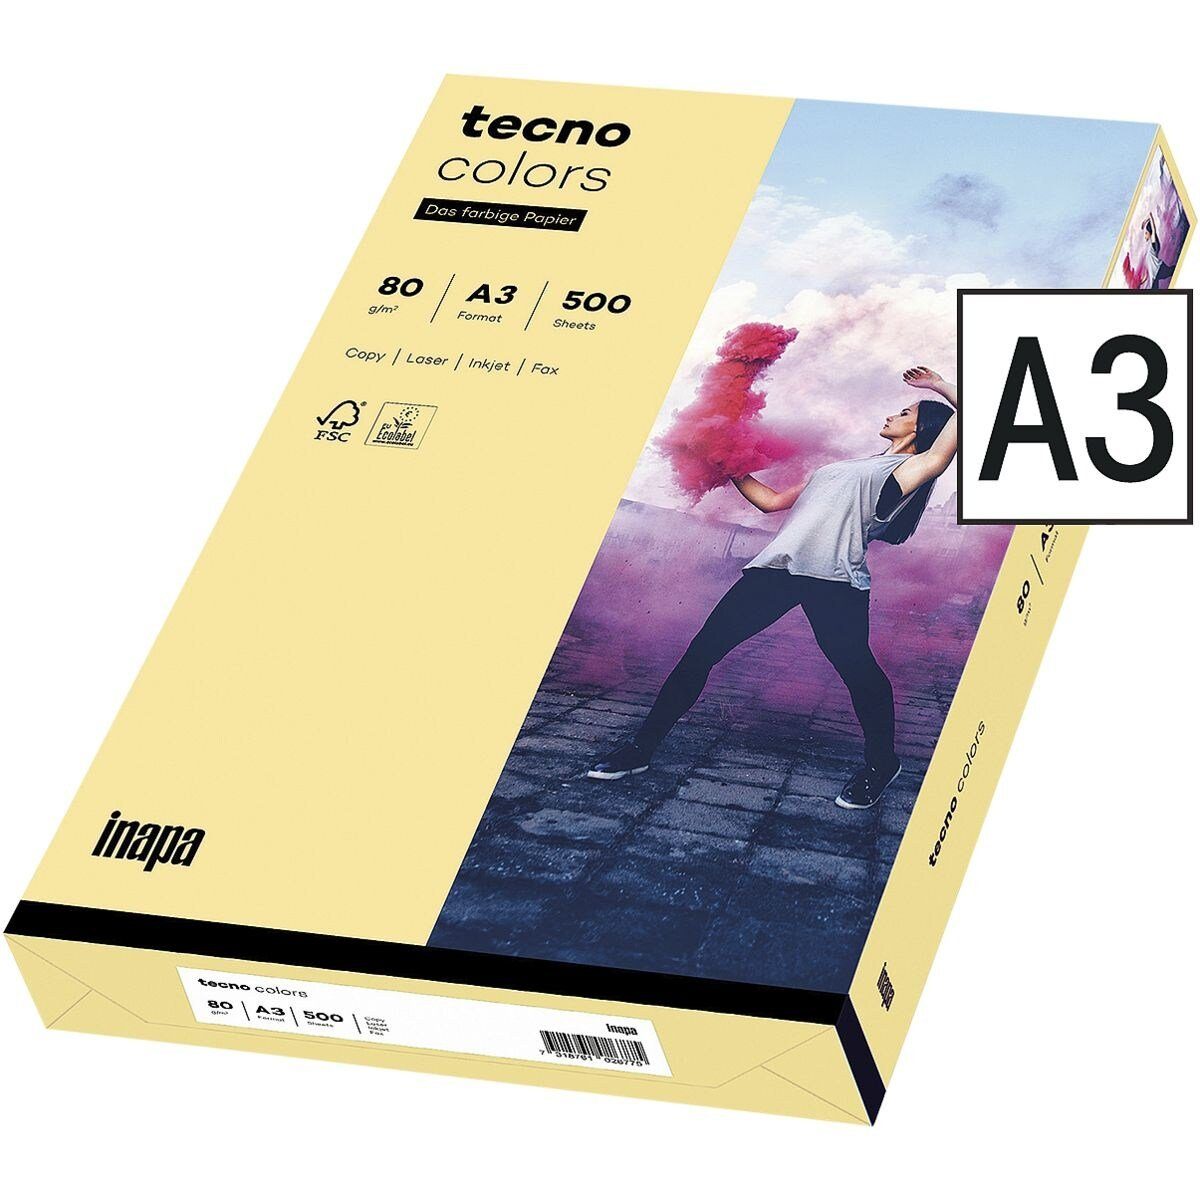 A3, Pastellfarben, DIN Colors, und g/m², chamois Blatt 500 80 tecno tecno / Inapa Rainbow Drucker- Kopierpapier Format